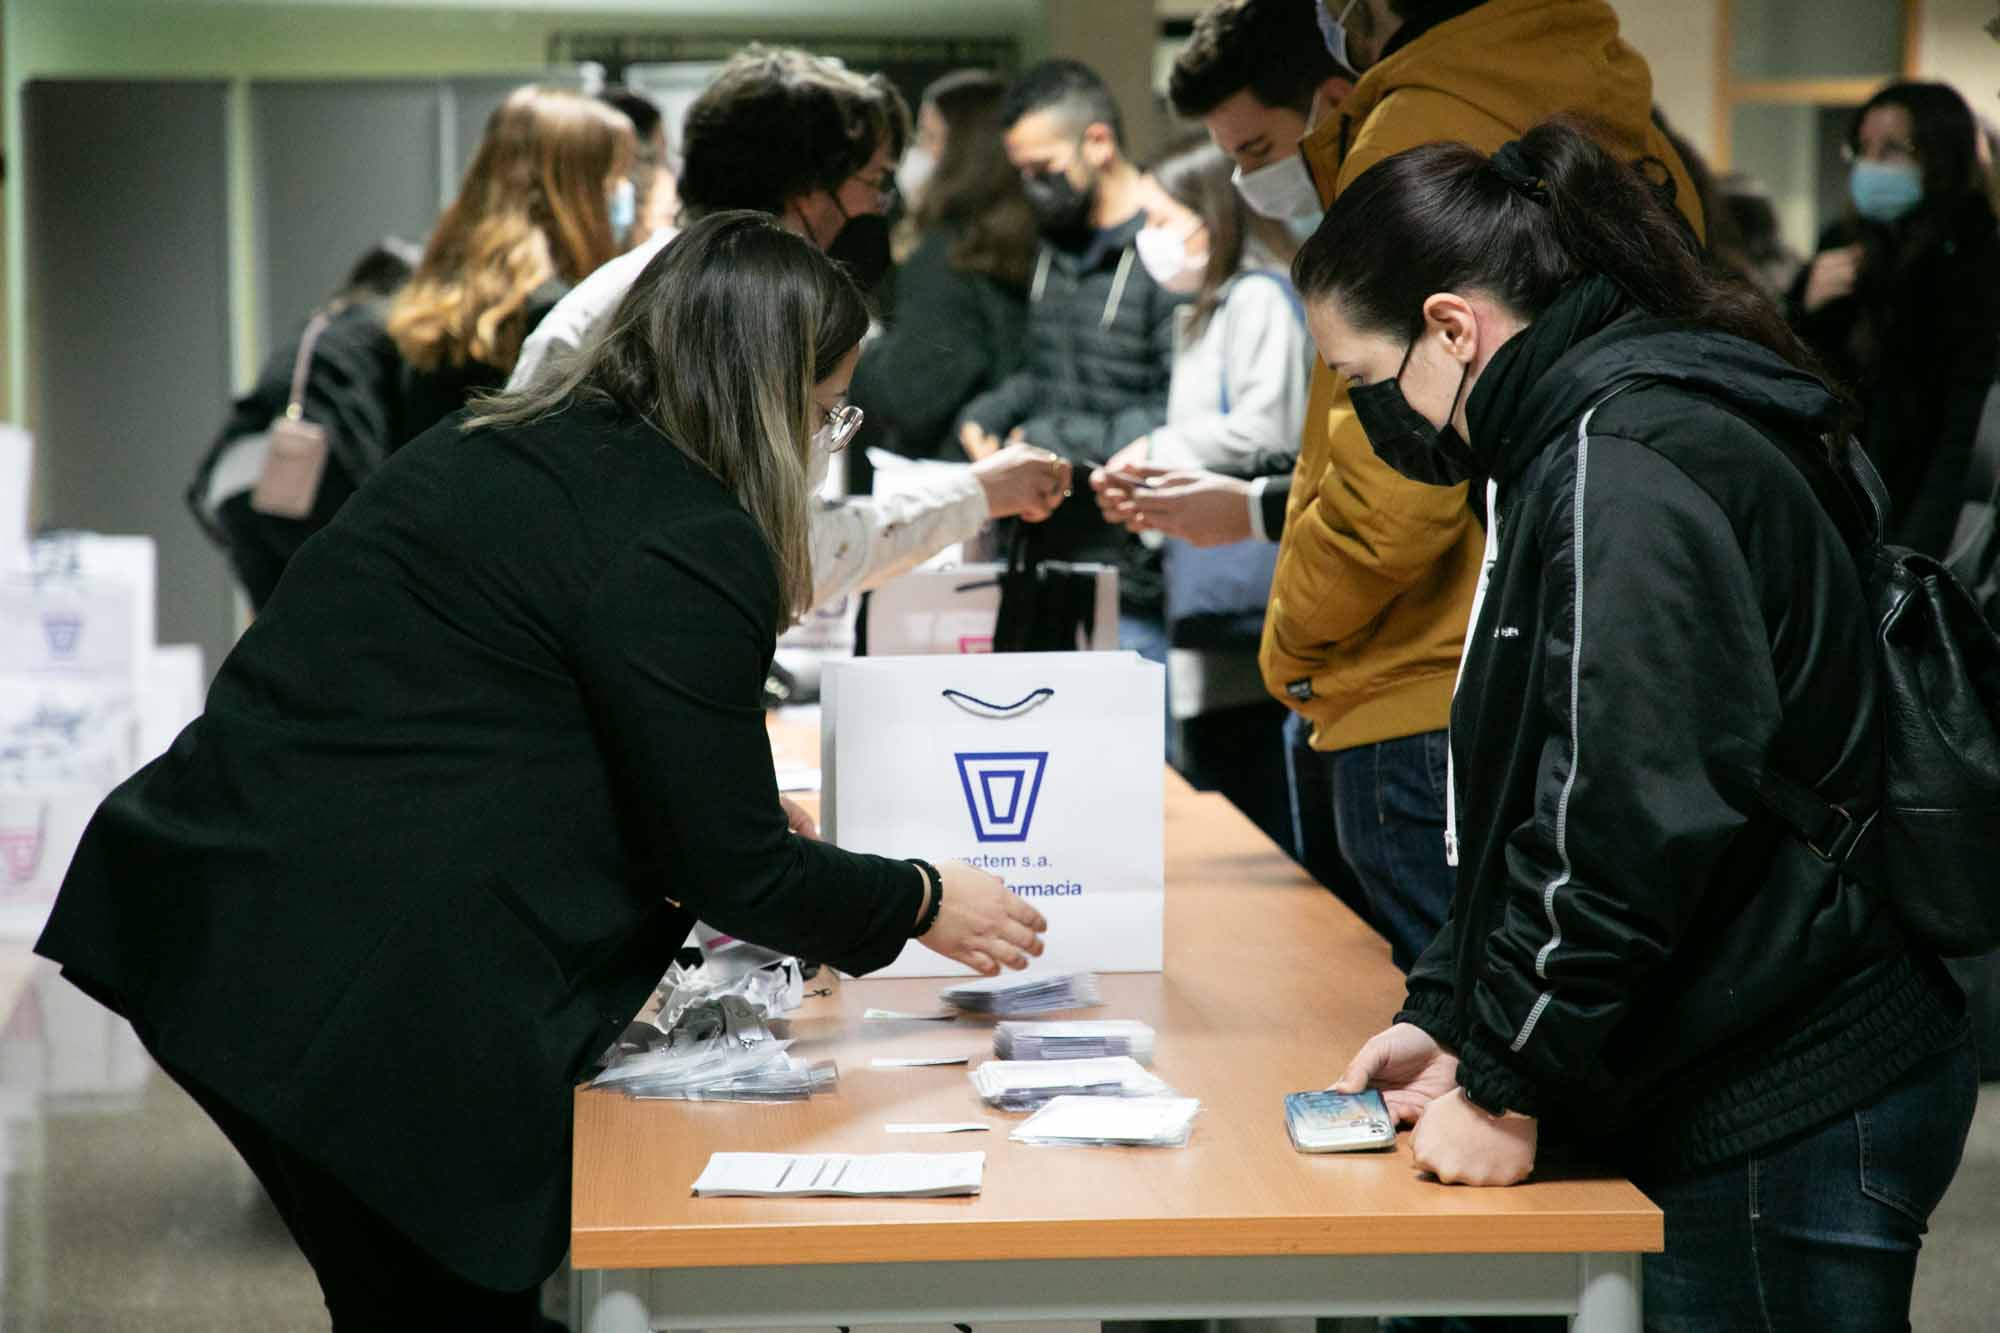 XII Congress of Pharmacy Students of the Universitat de València